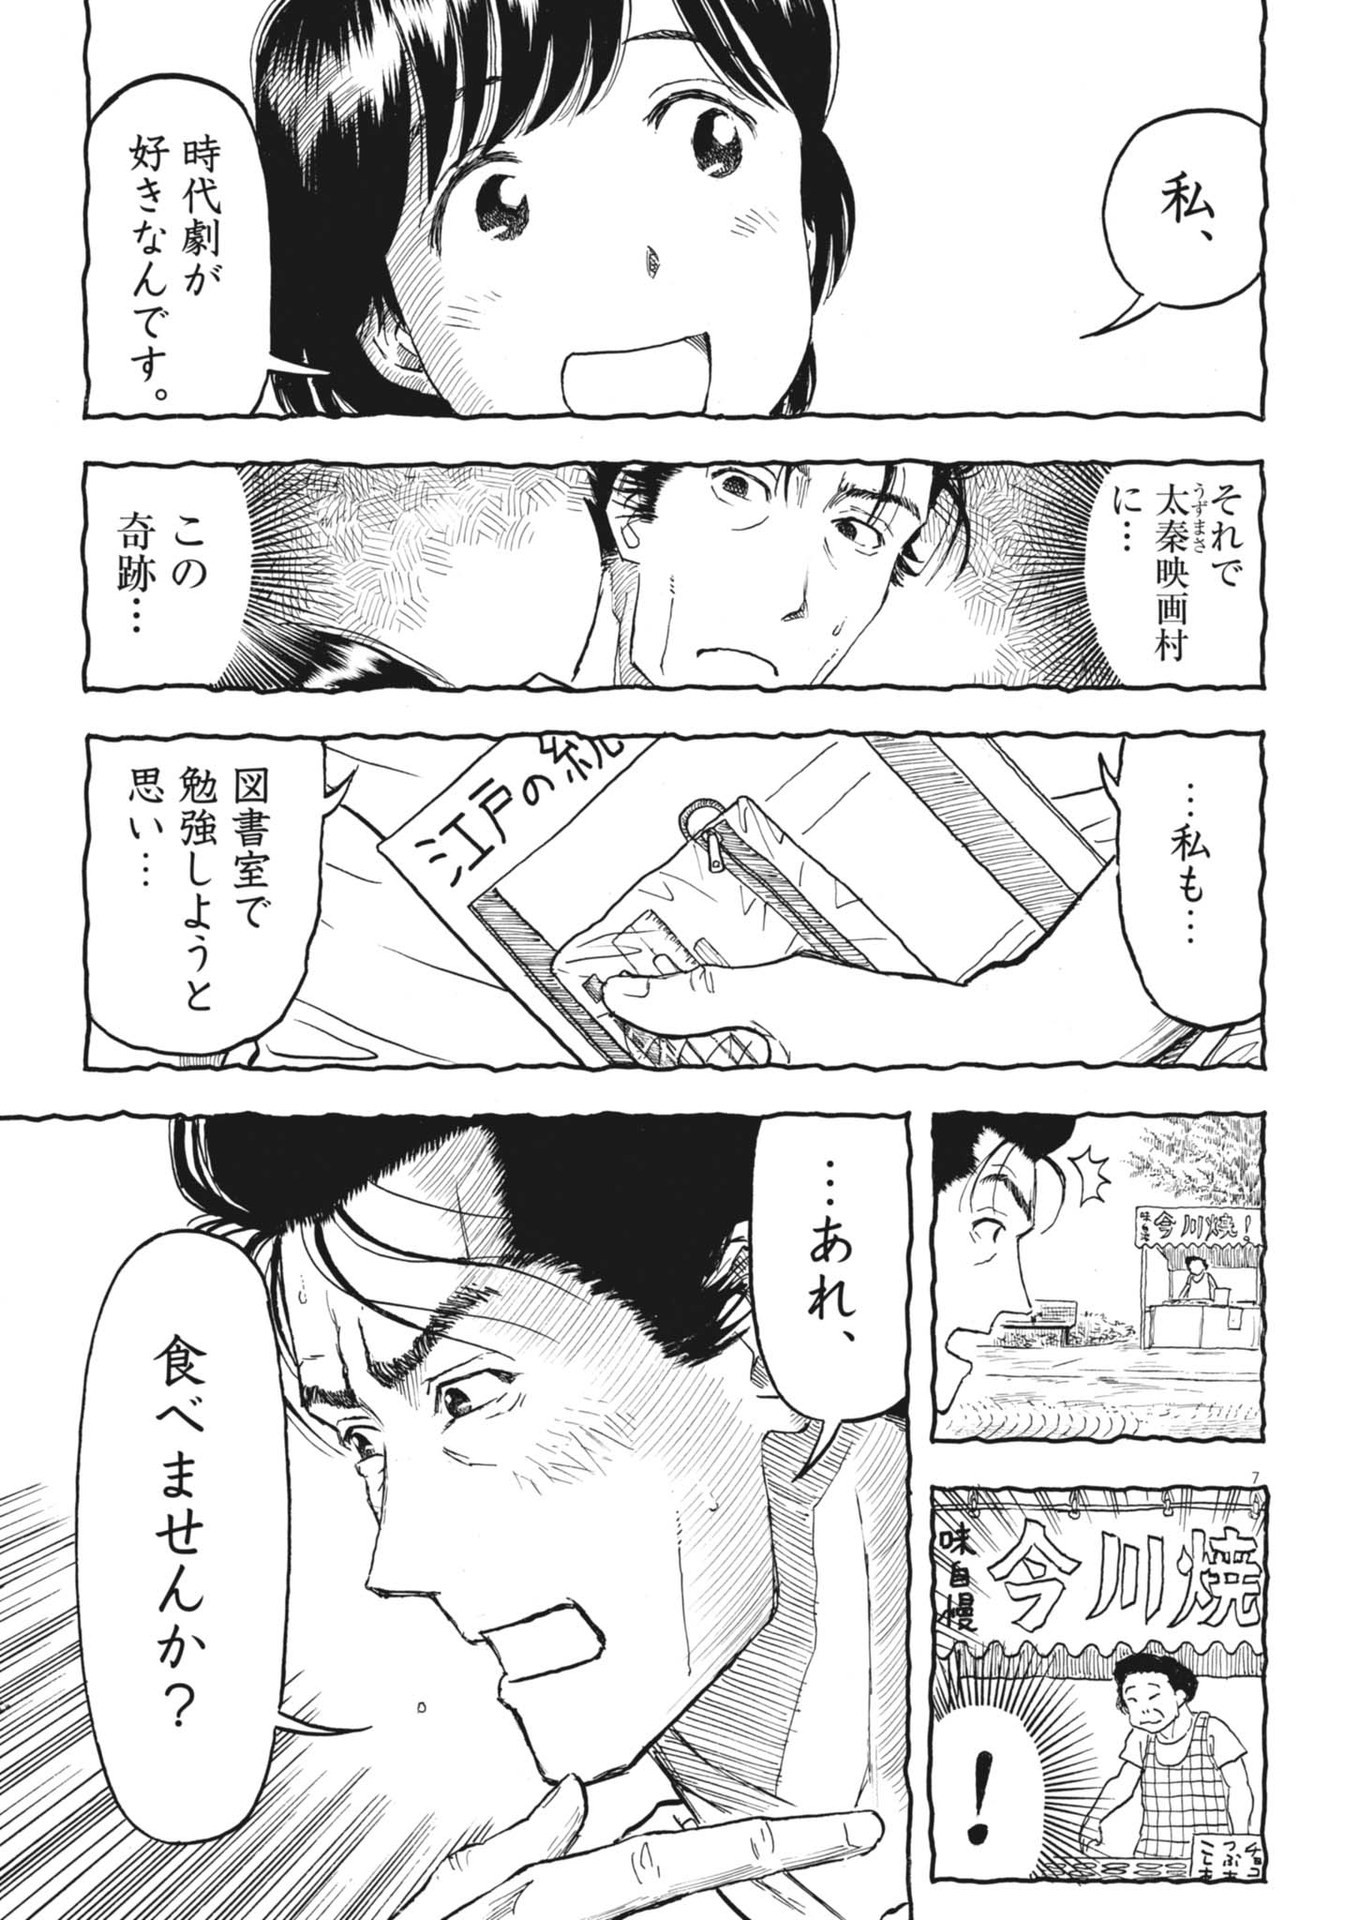 Komegura Fuufu no Recipe-chou - Chapter 39 - Page 7